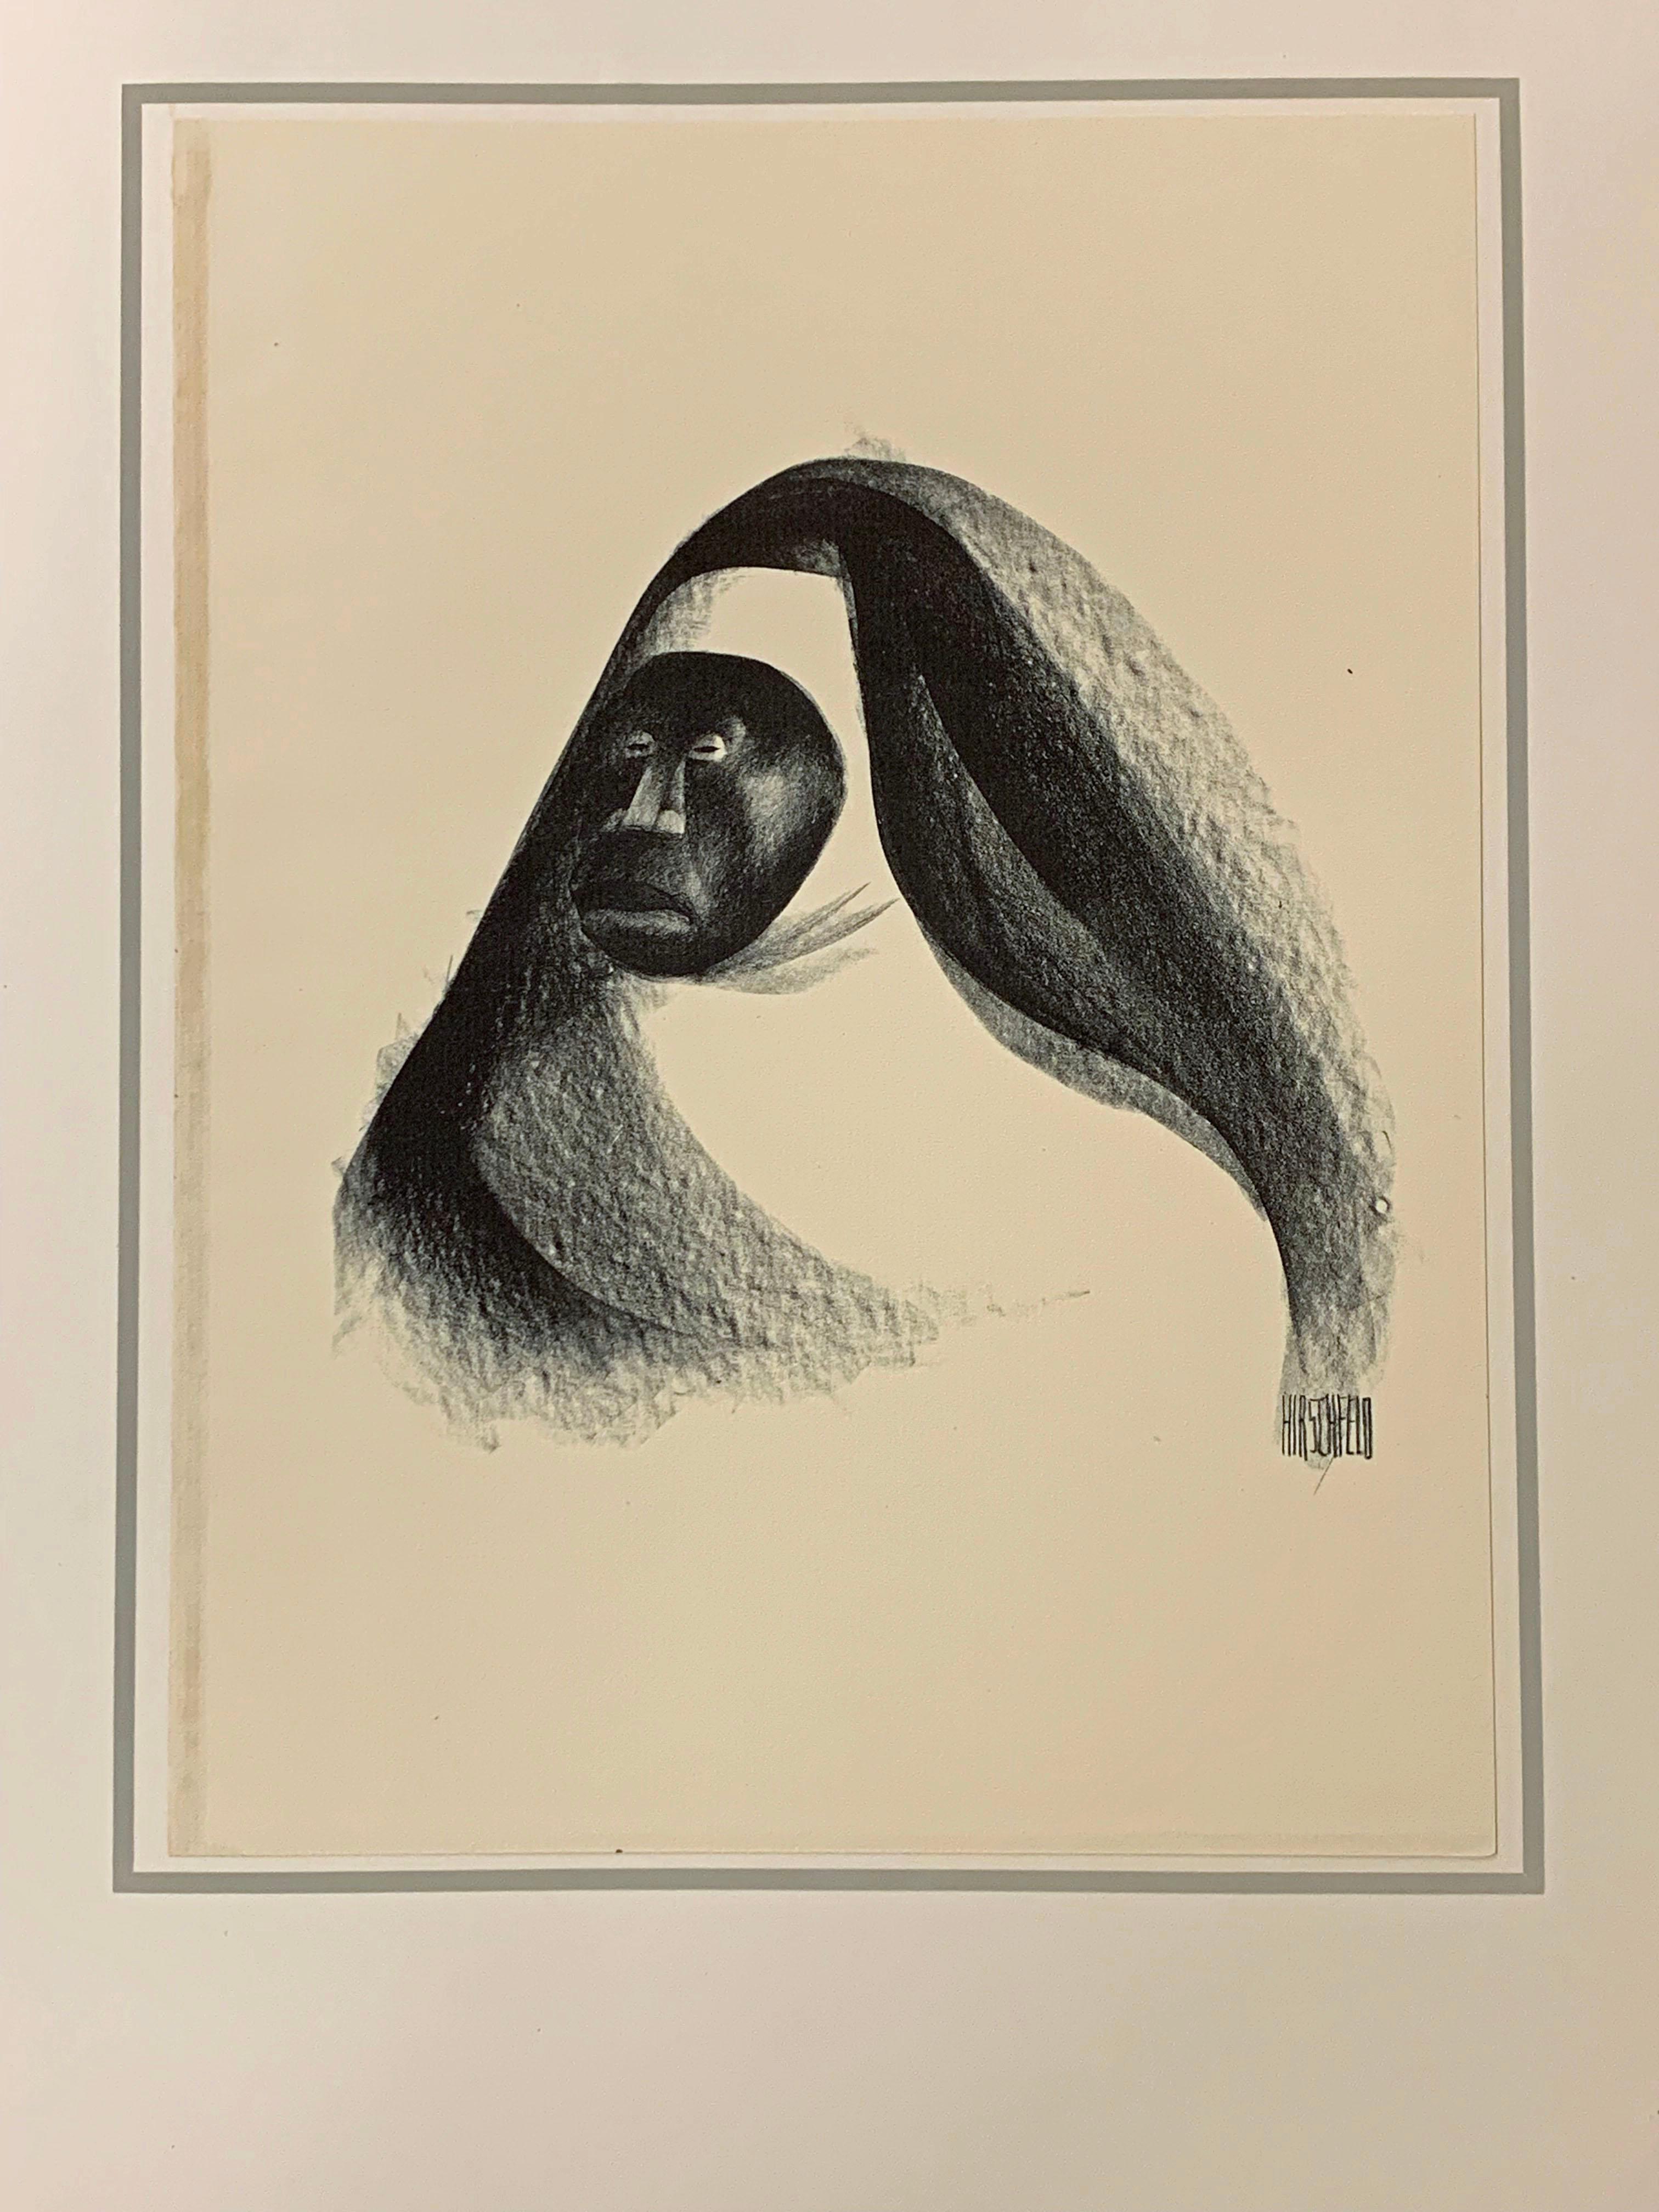 HARLEM AS SEEN BY HIRSCHFELD - Print by Albert Al Hirschfeld